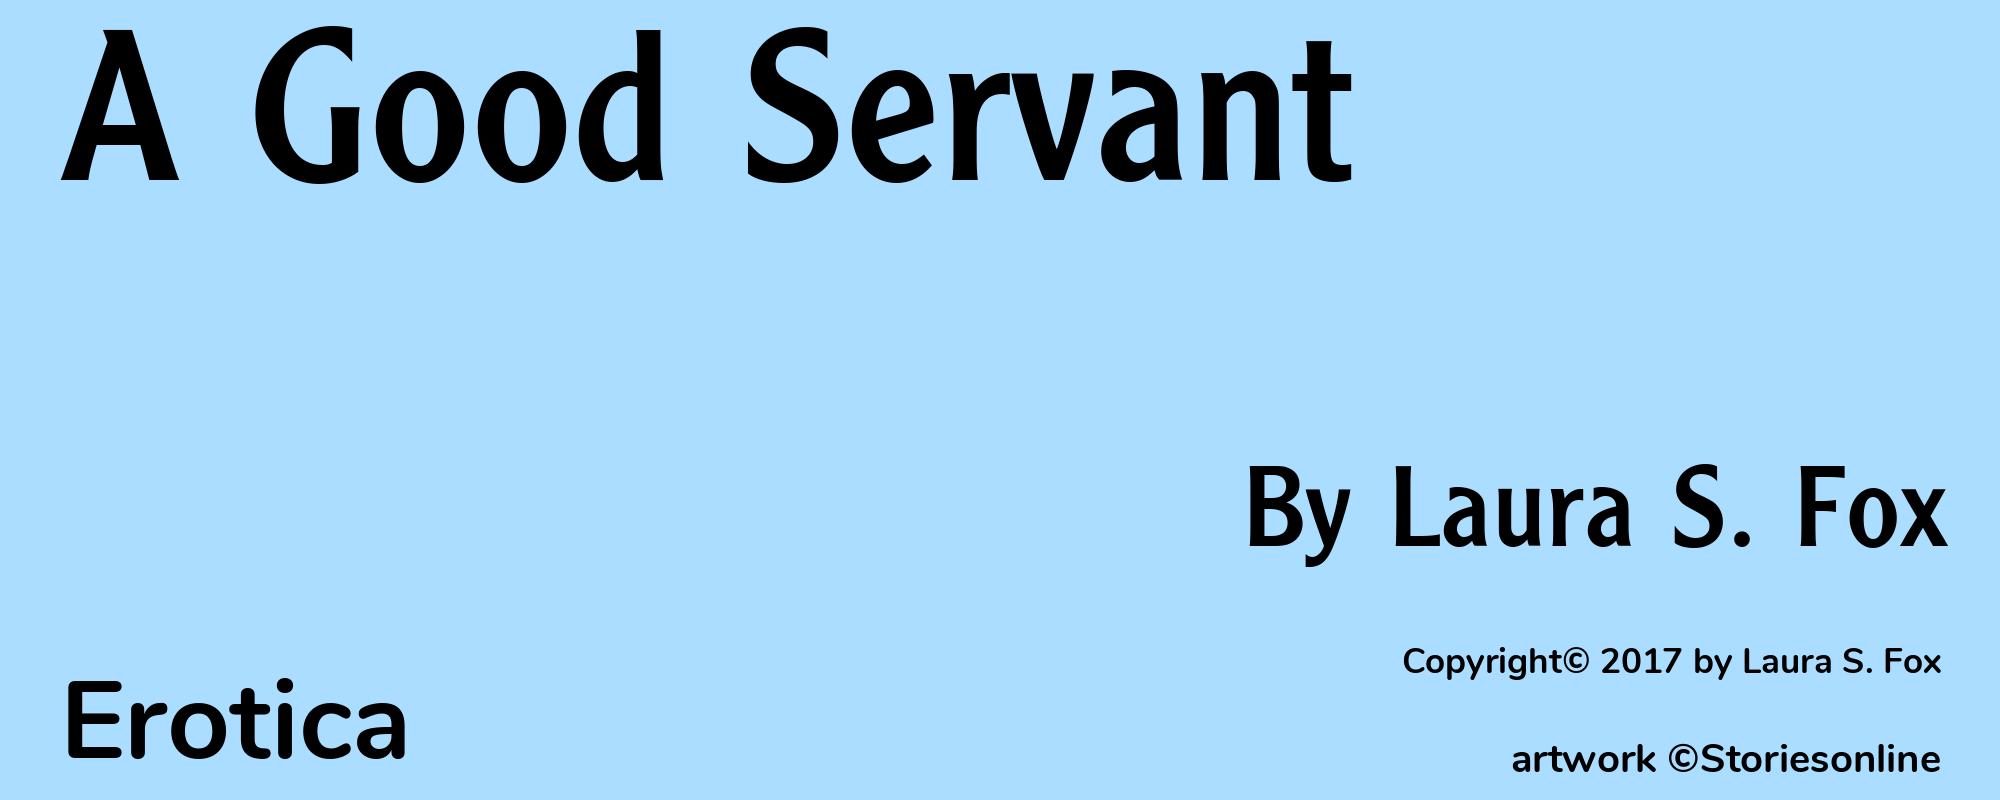 A Good Servant - Cover